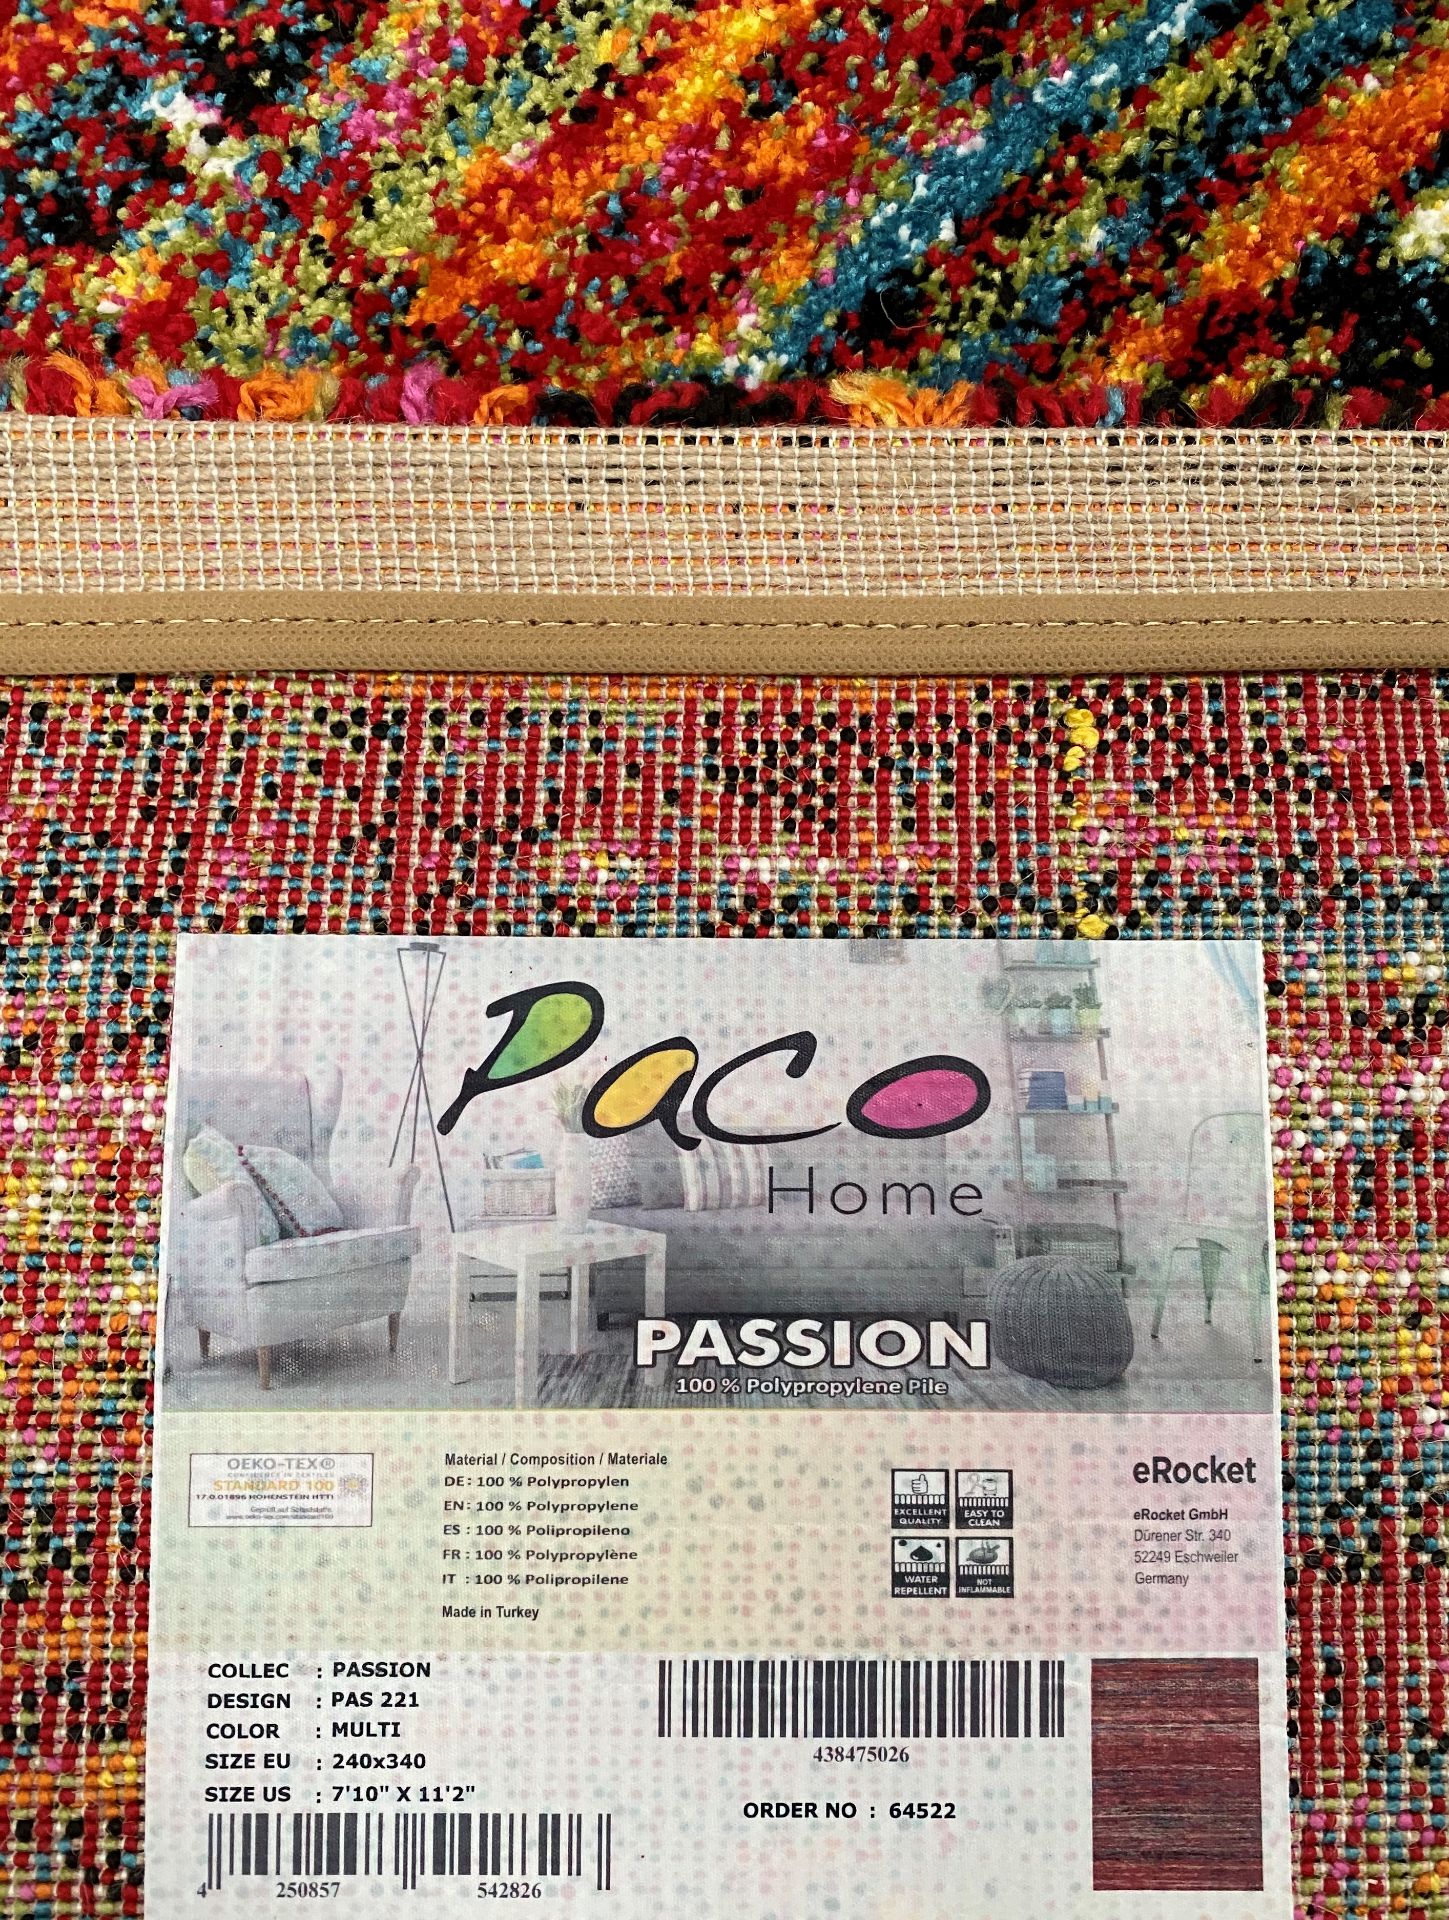 A Paco Home Passion PAS 221 multicoloured rug - 240cm x 340cm - Image 2 of 2